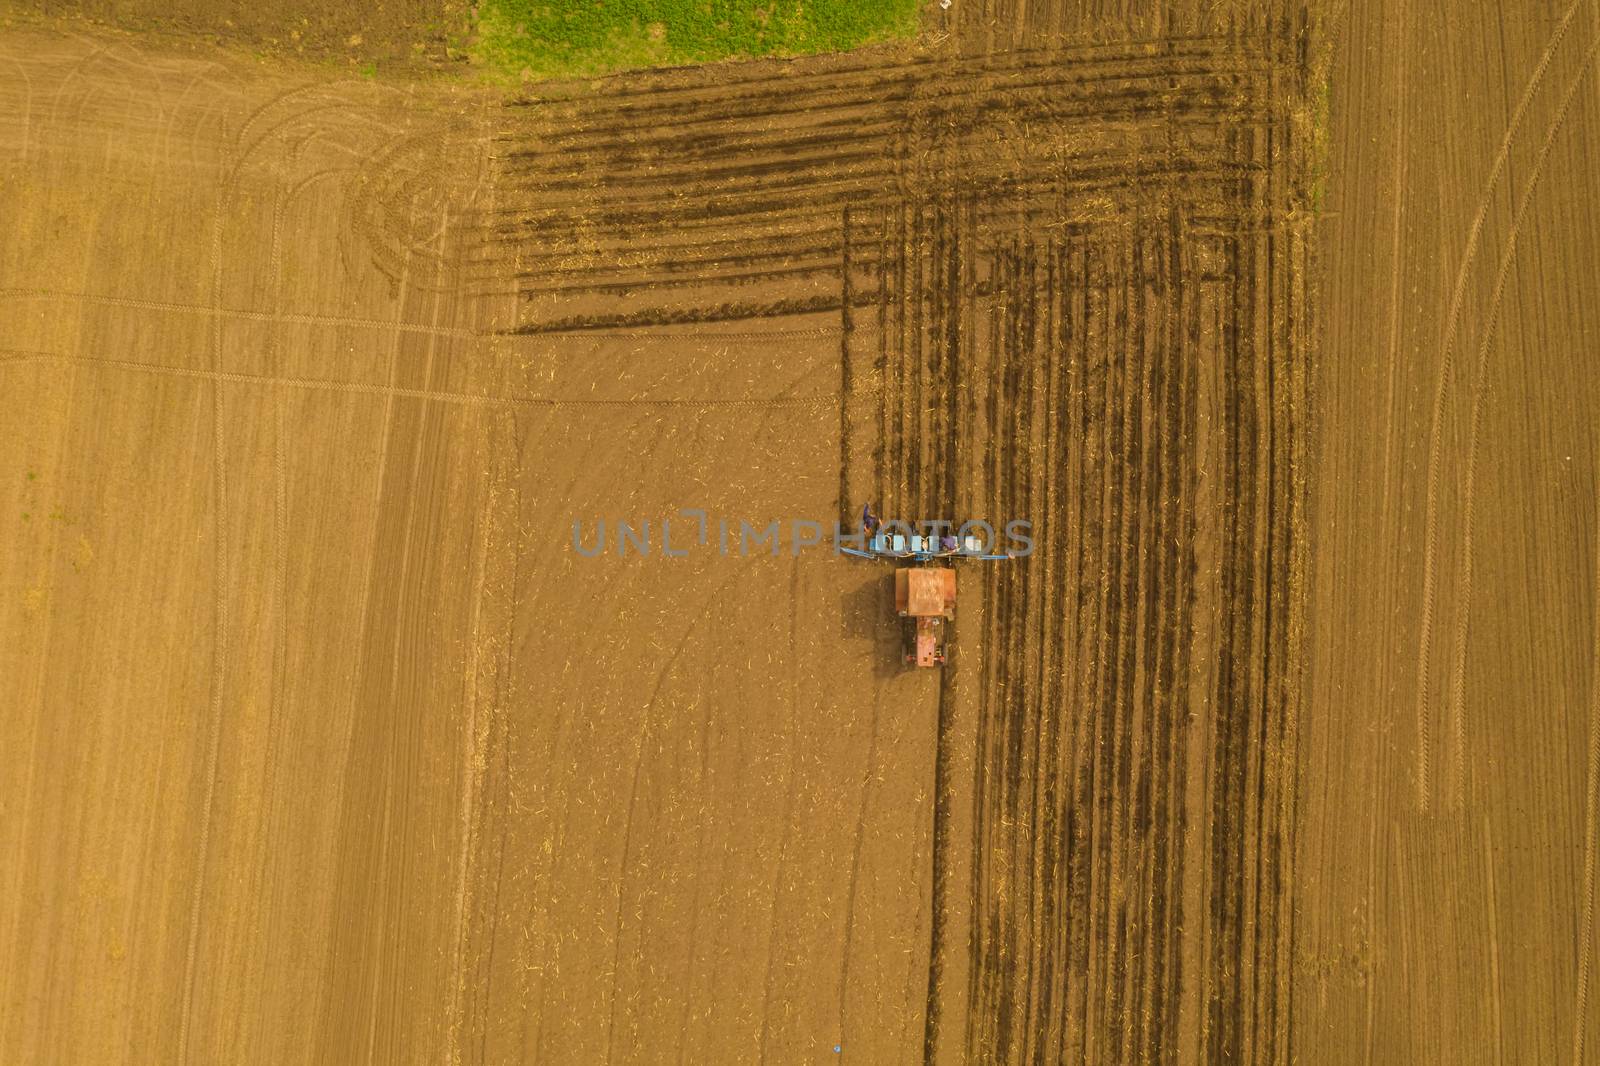 Seeding traktor on spring field, up view